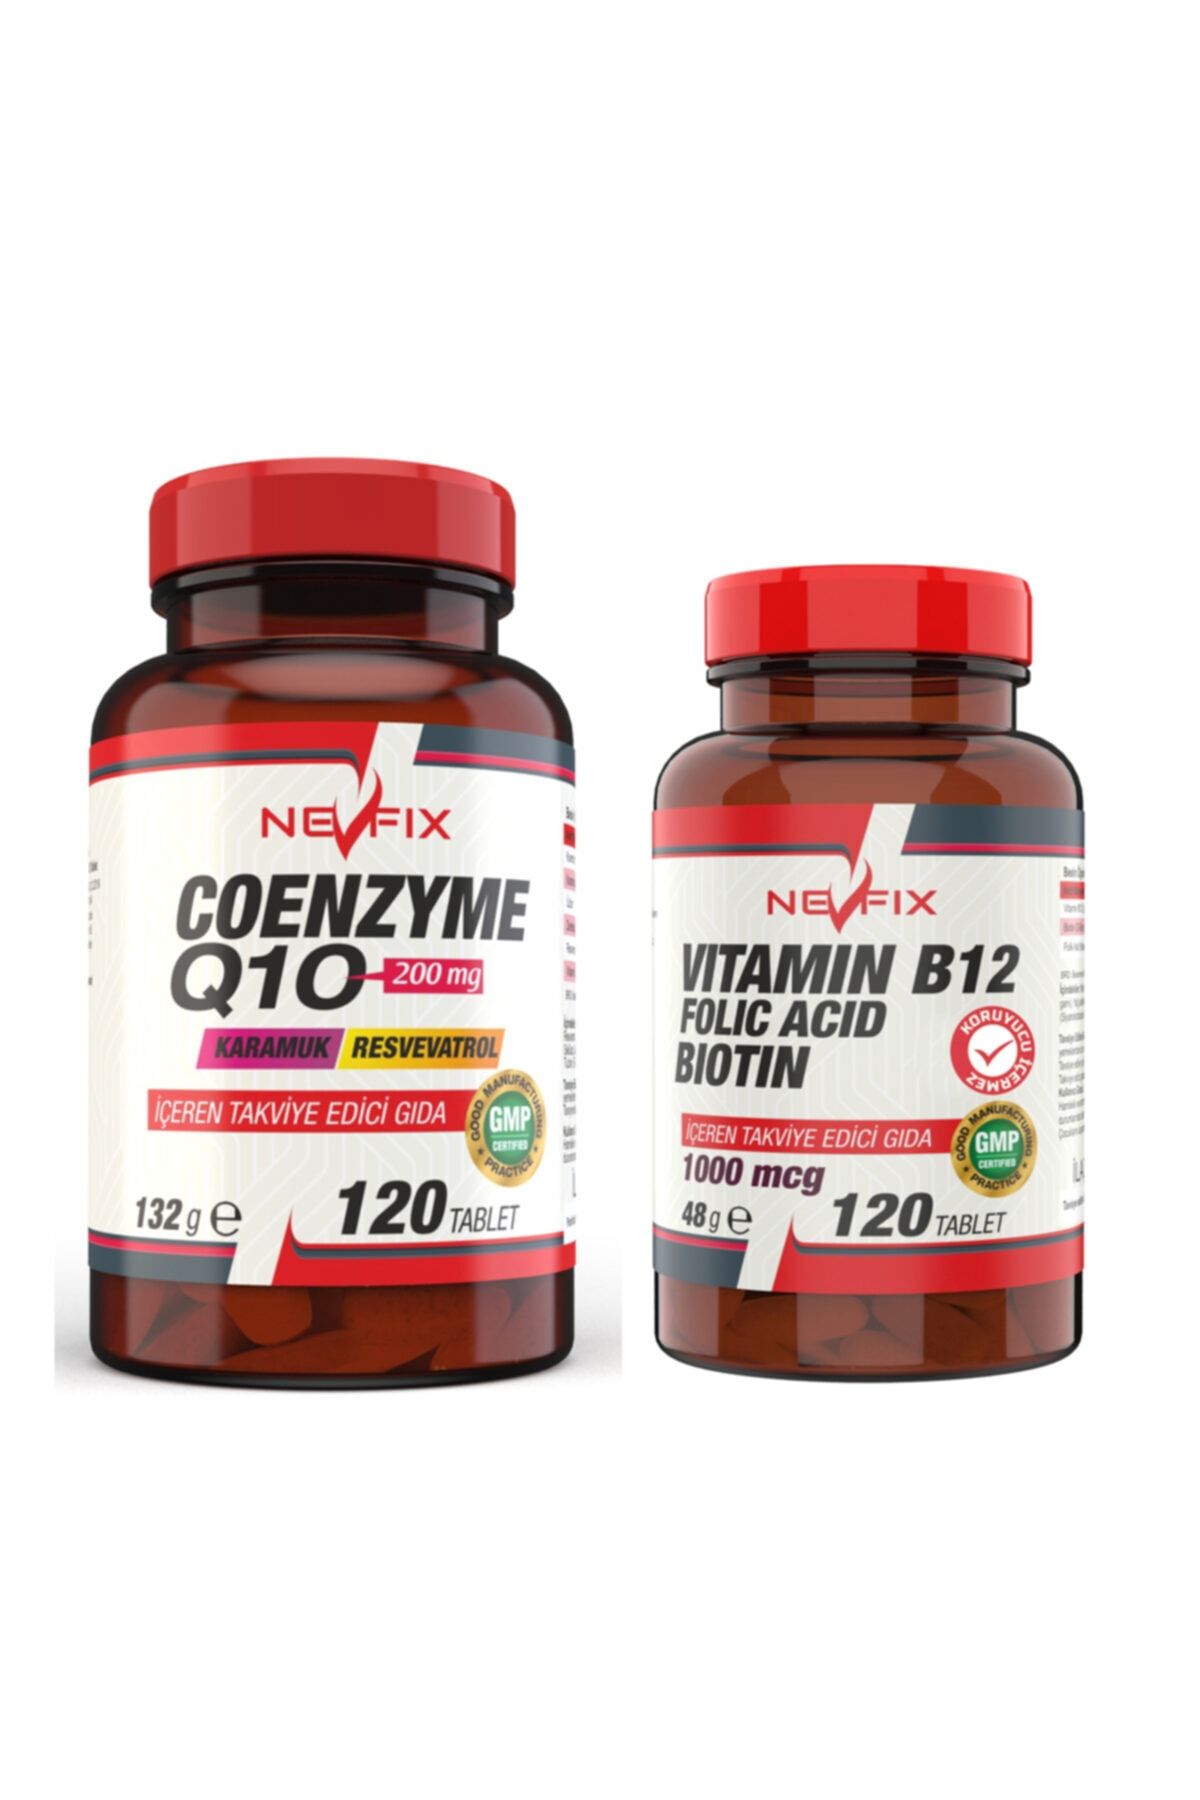 Nevfix Coenzyme Q 10 200 Mg 120 Tablet B12 Folic Acid Biotin 120 Tablet